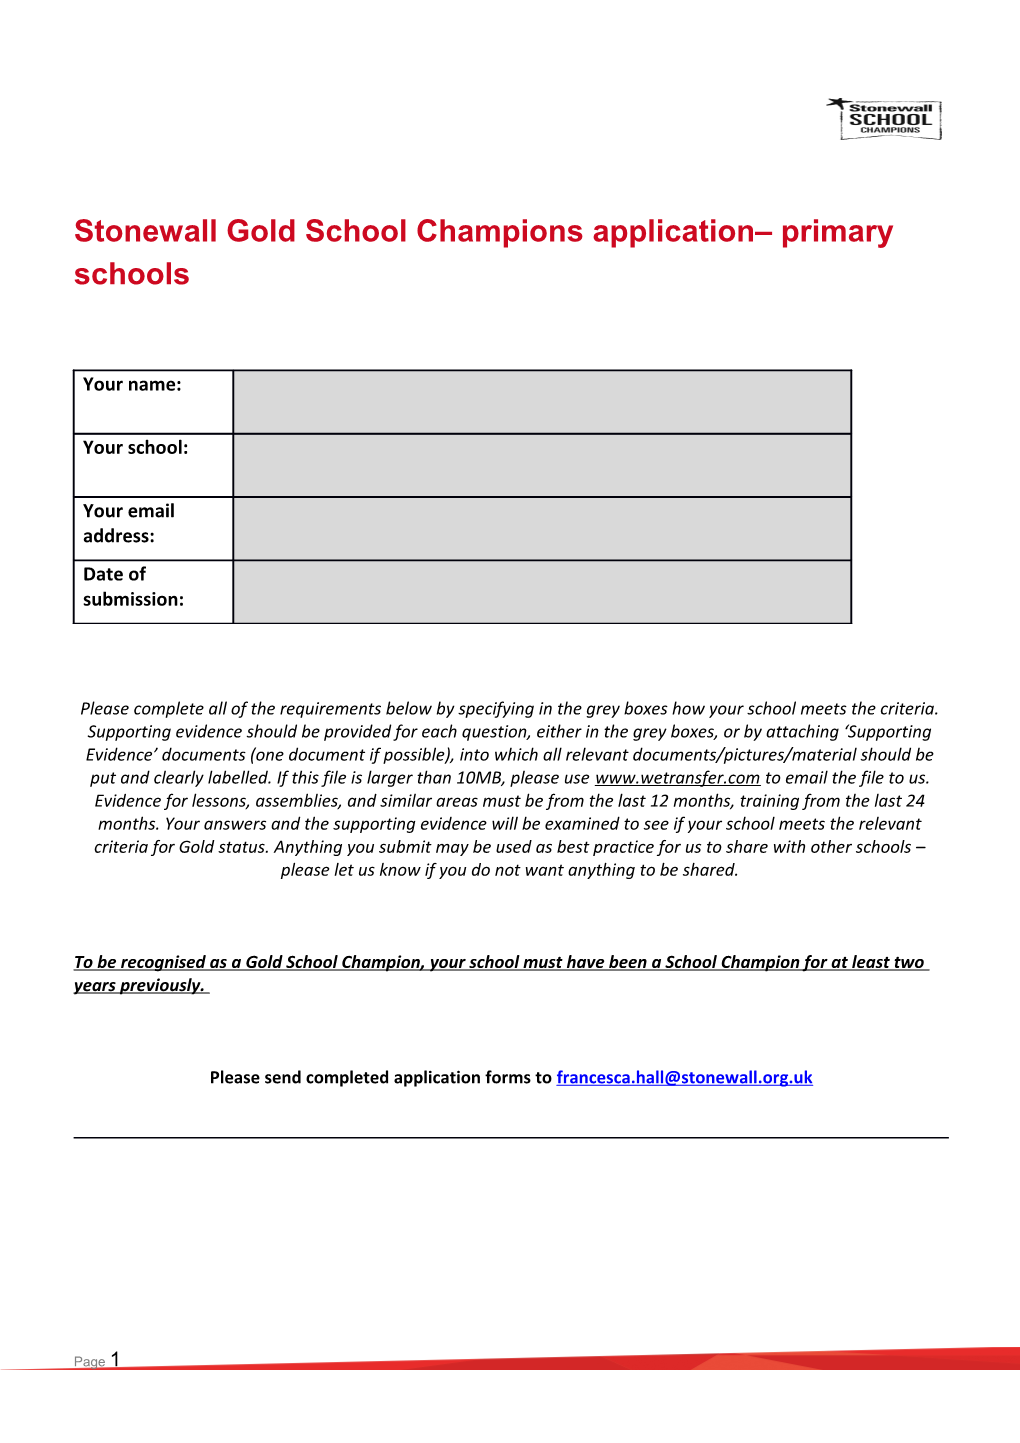 Stonewall Goldschool Champions Application Primary Schools